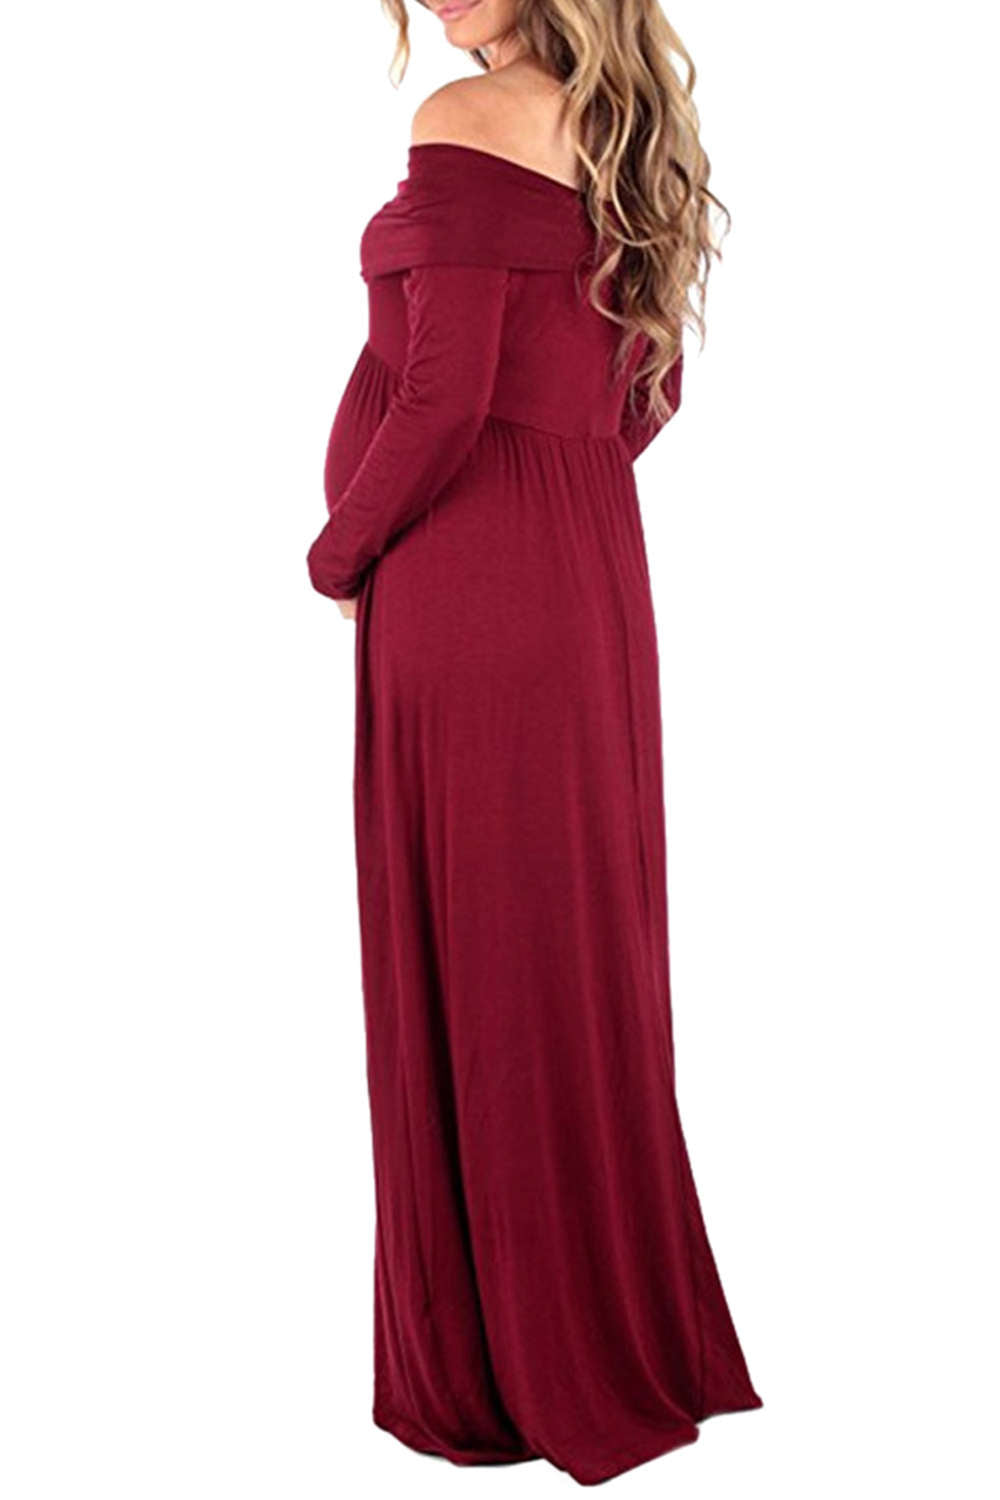 Iyasson Maternity Off Shoulder Maxi Dress